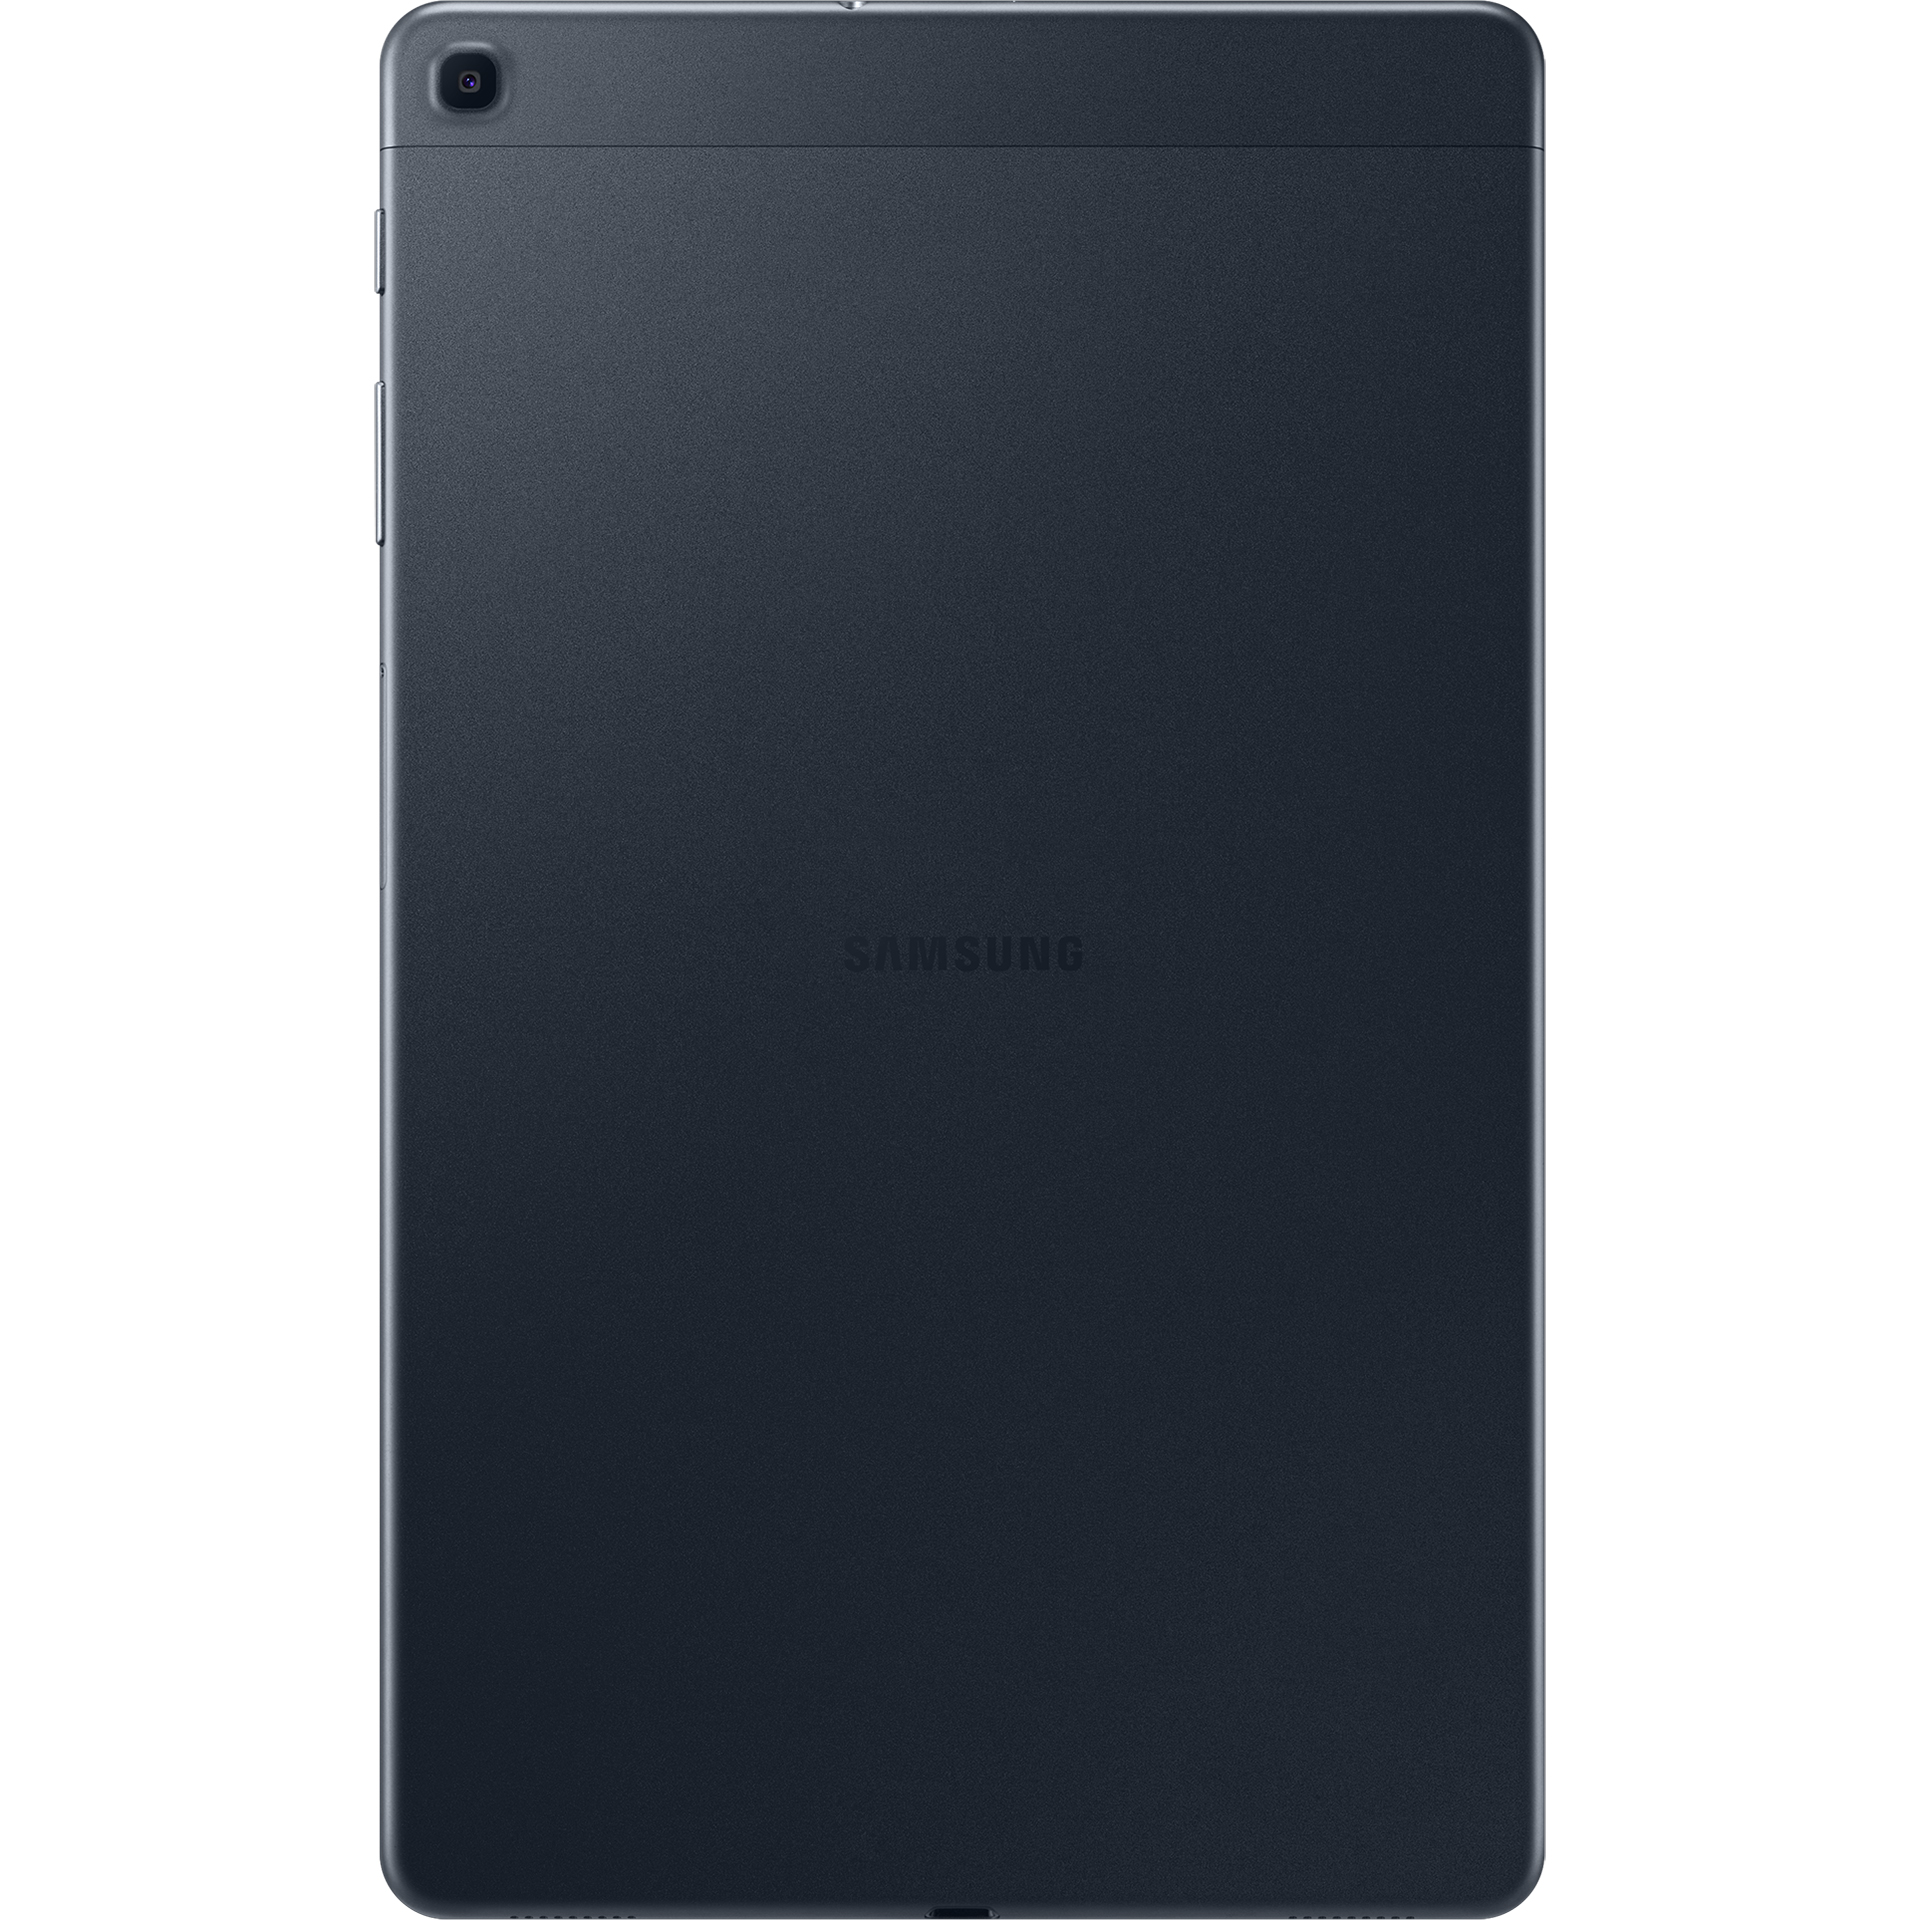  SAMSUNG Galaxy Tab A 10.1 (2019, WiFi + Cellular) Full HD  Corner-to-Corner Display, 32GB 4G LTE Tablet GSM Unlocked SM-T515,  International Model (32 GB, Black) : Electronics